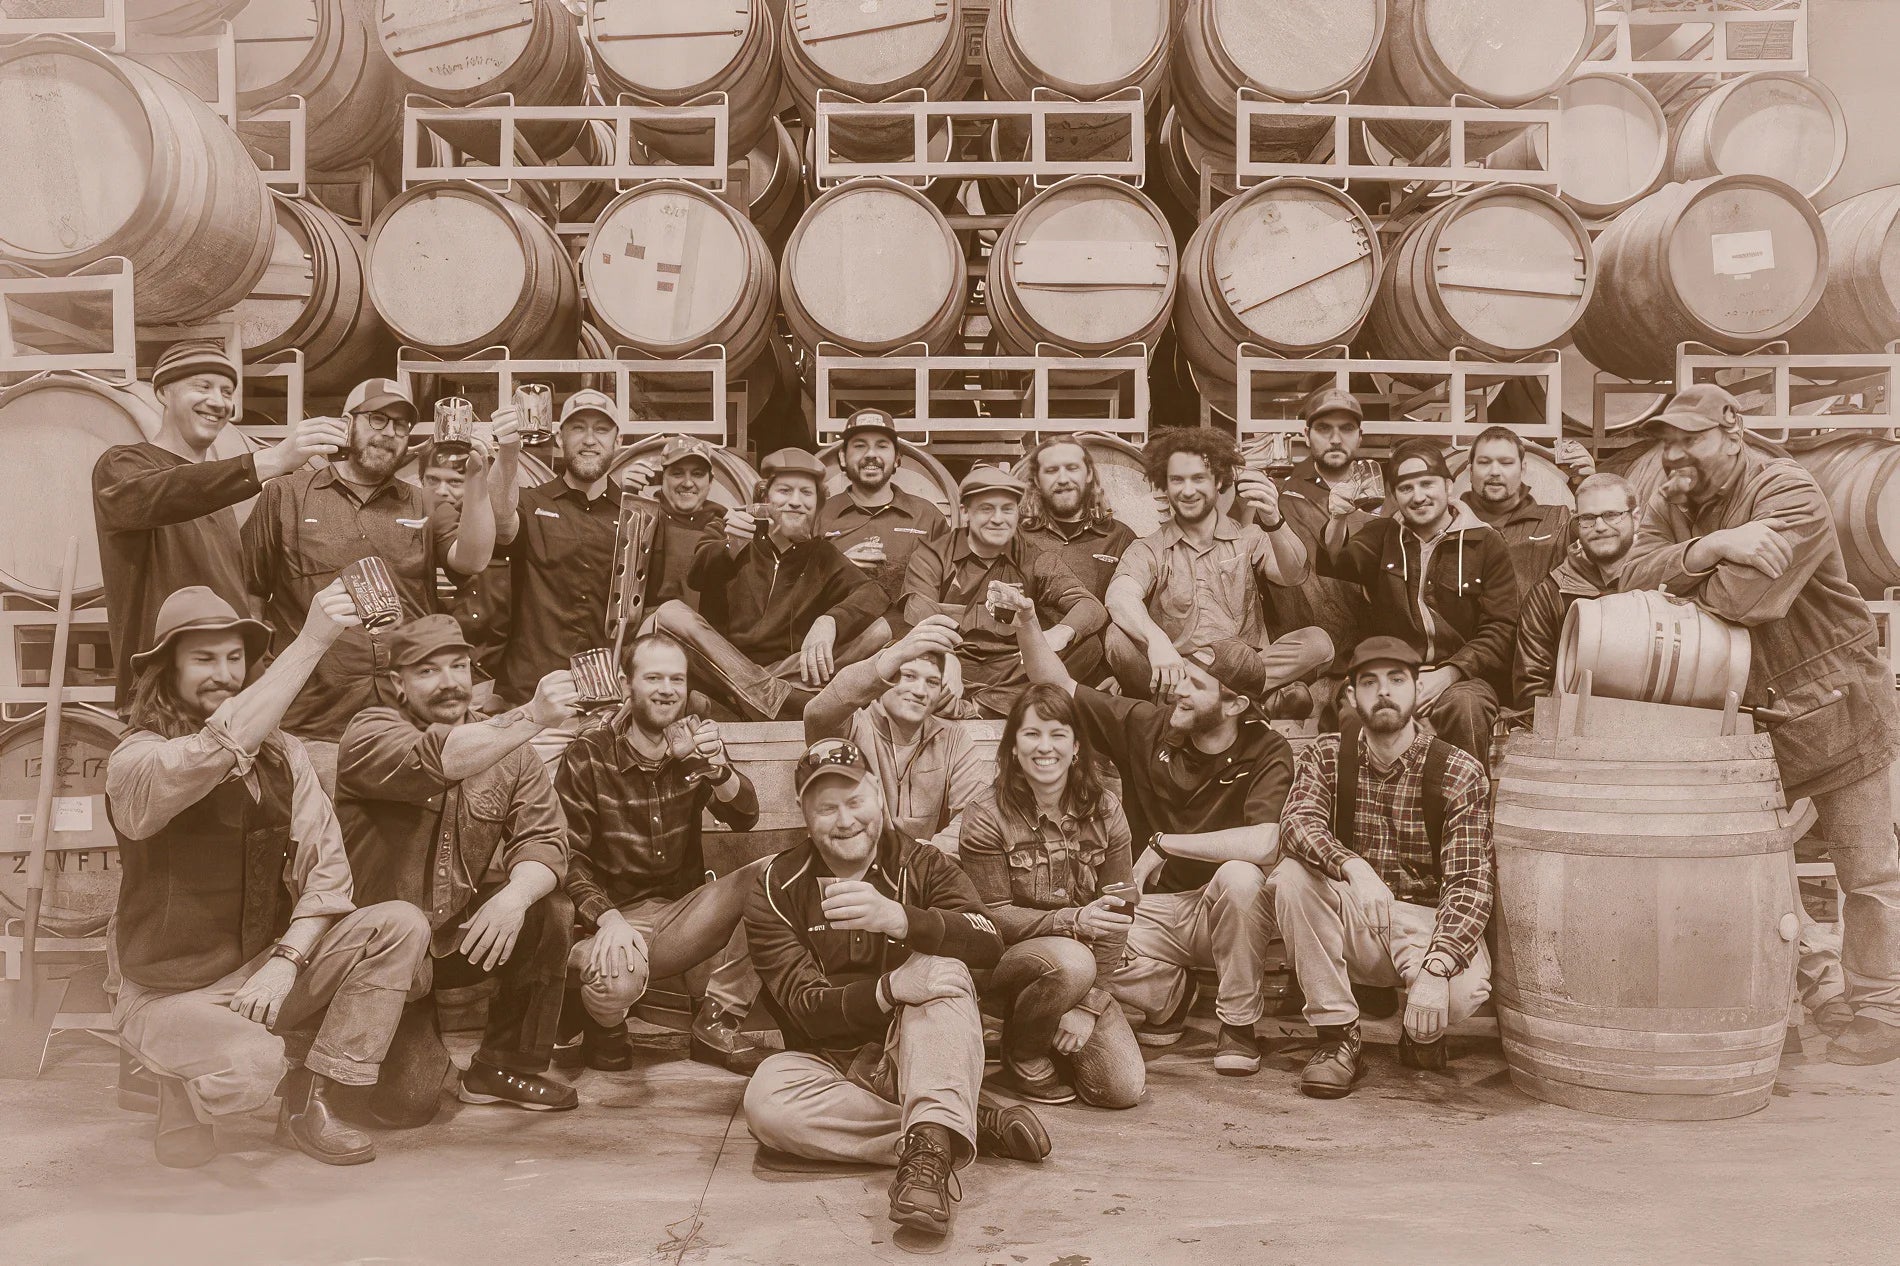 A sepia-toned photograph of the Deschutes brewing team.